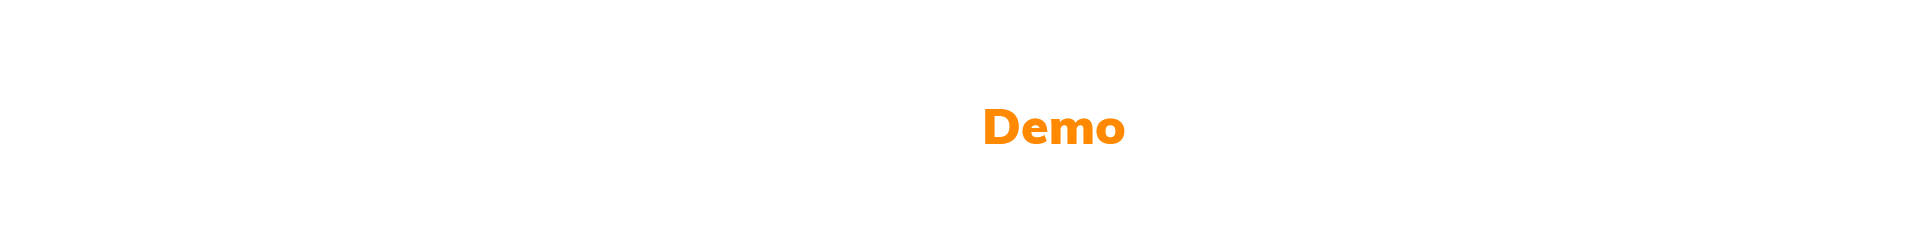 My-Digital-Demo